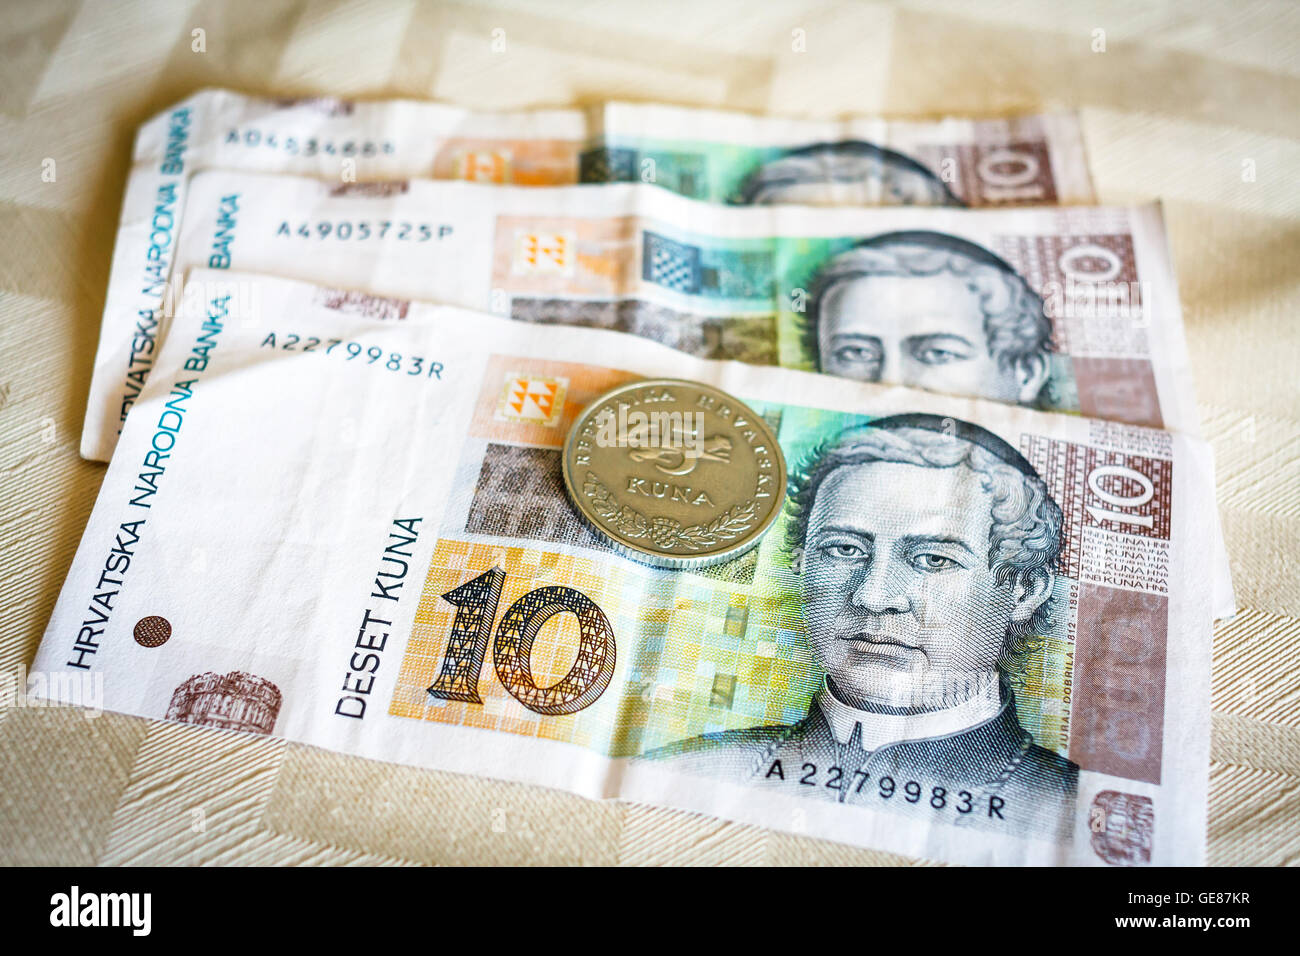 kuna, currency of Croatia Stock Photo